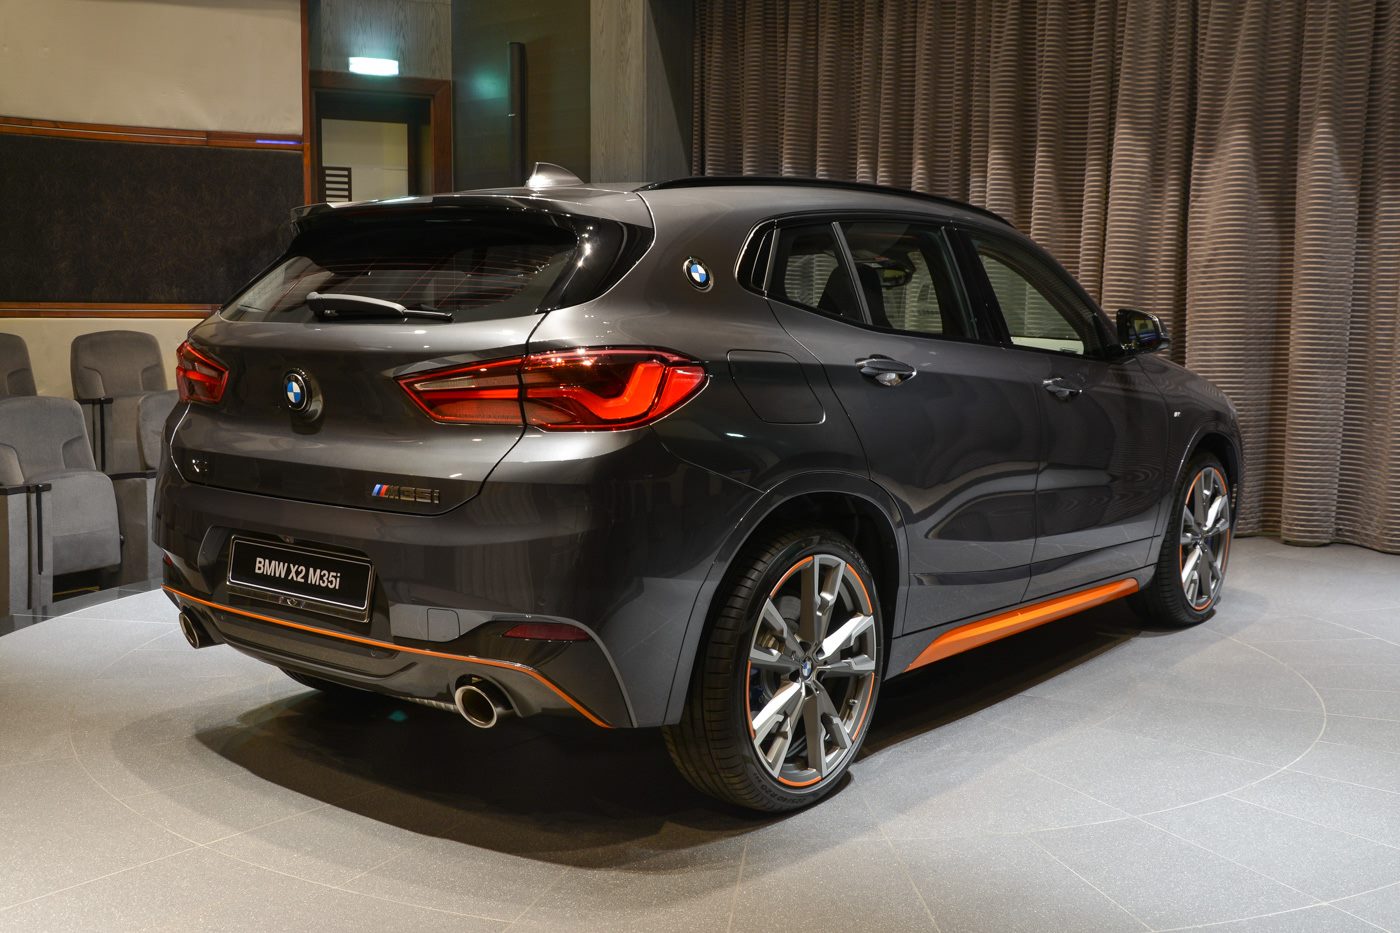 Bmw X2 M35i Has Bold Orange Hot Hatch Spec Autoevolution